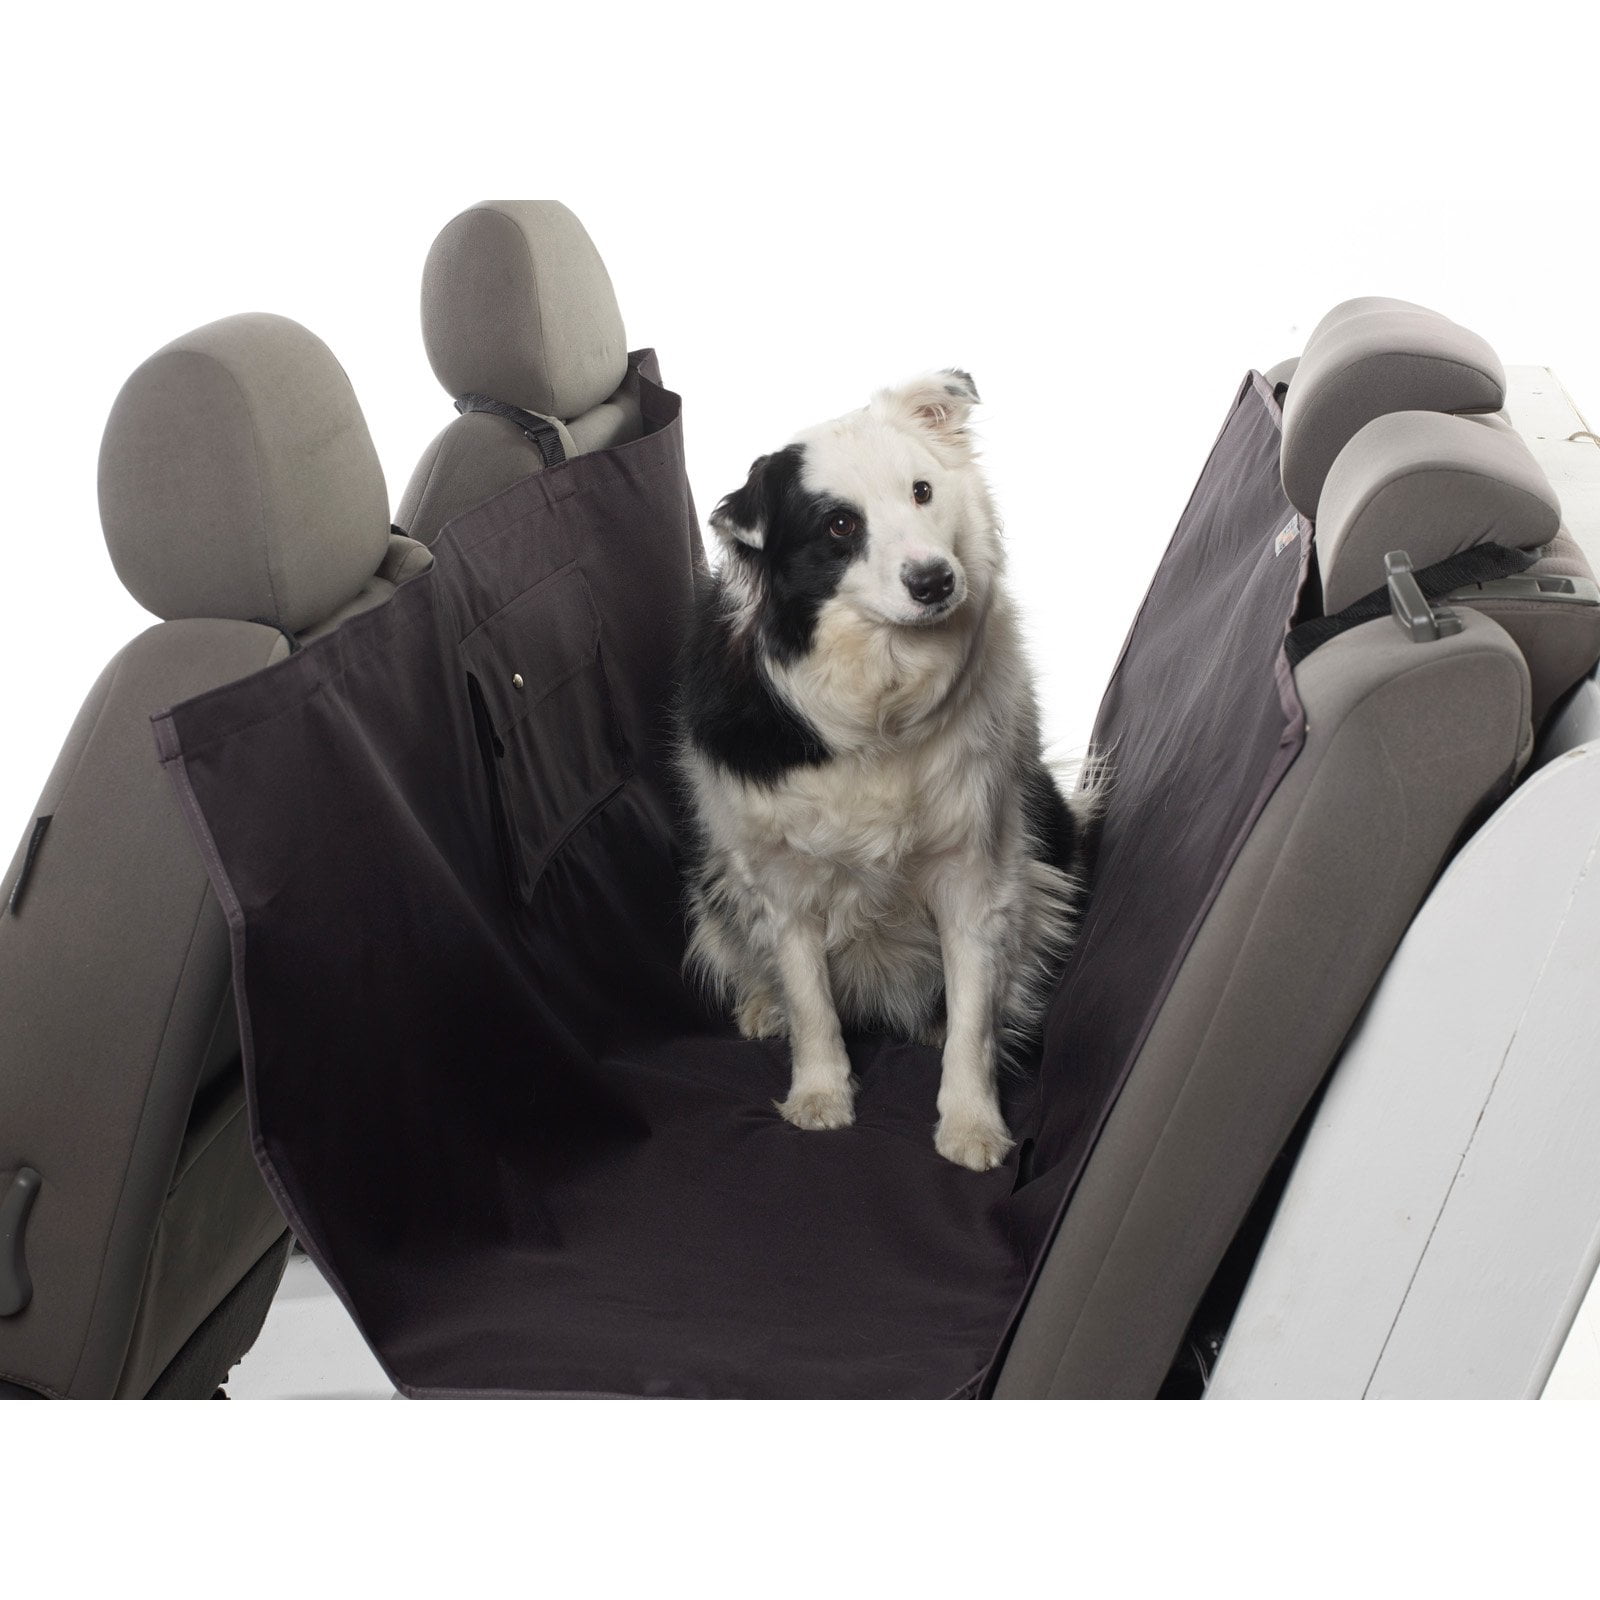 Basics Dog Pet Car Seat Cover